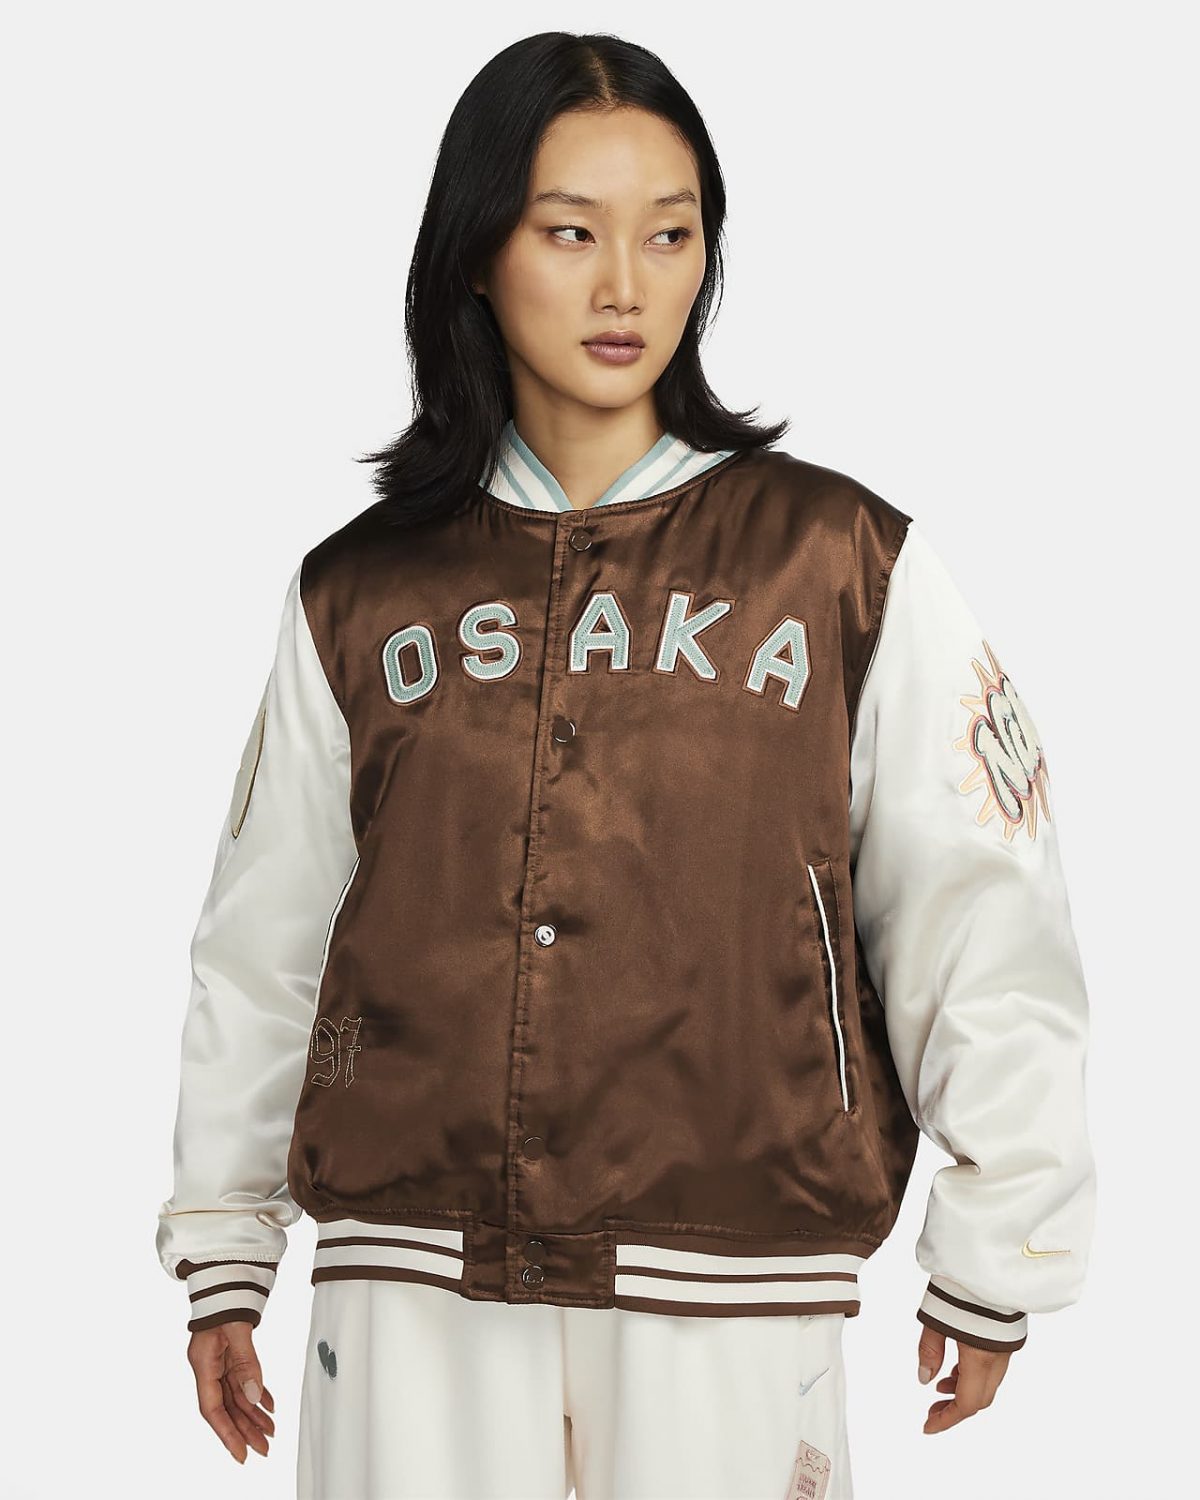 Женская куртка nike Naomi Osaka фото